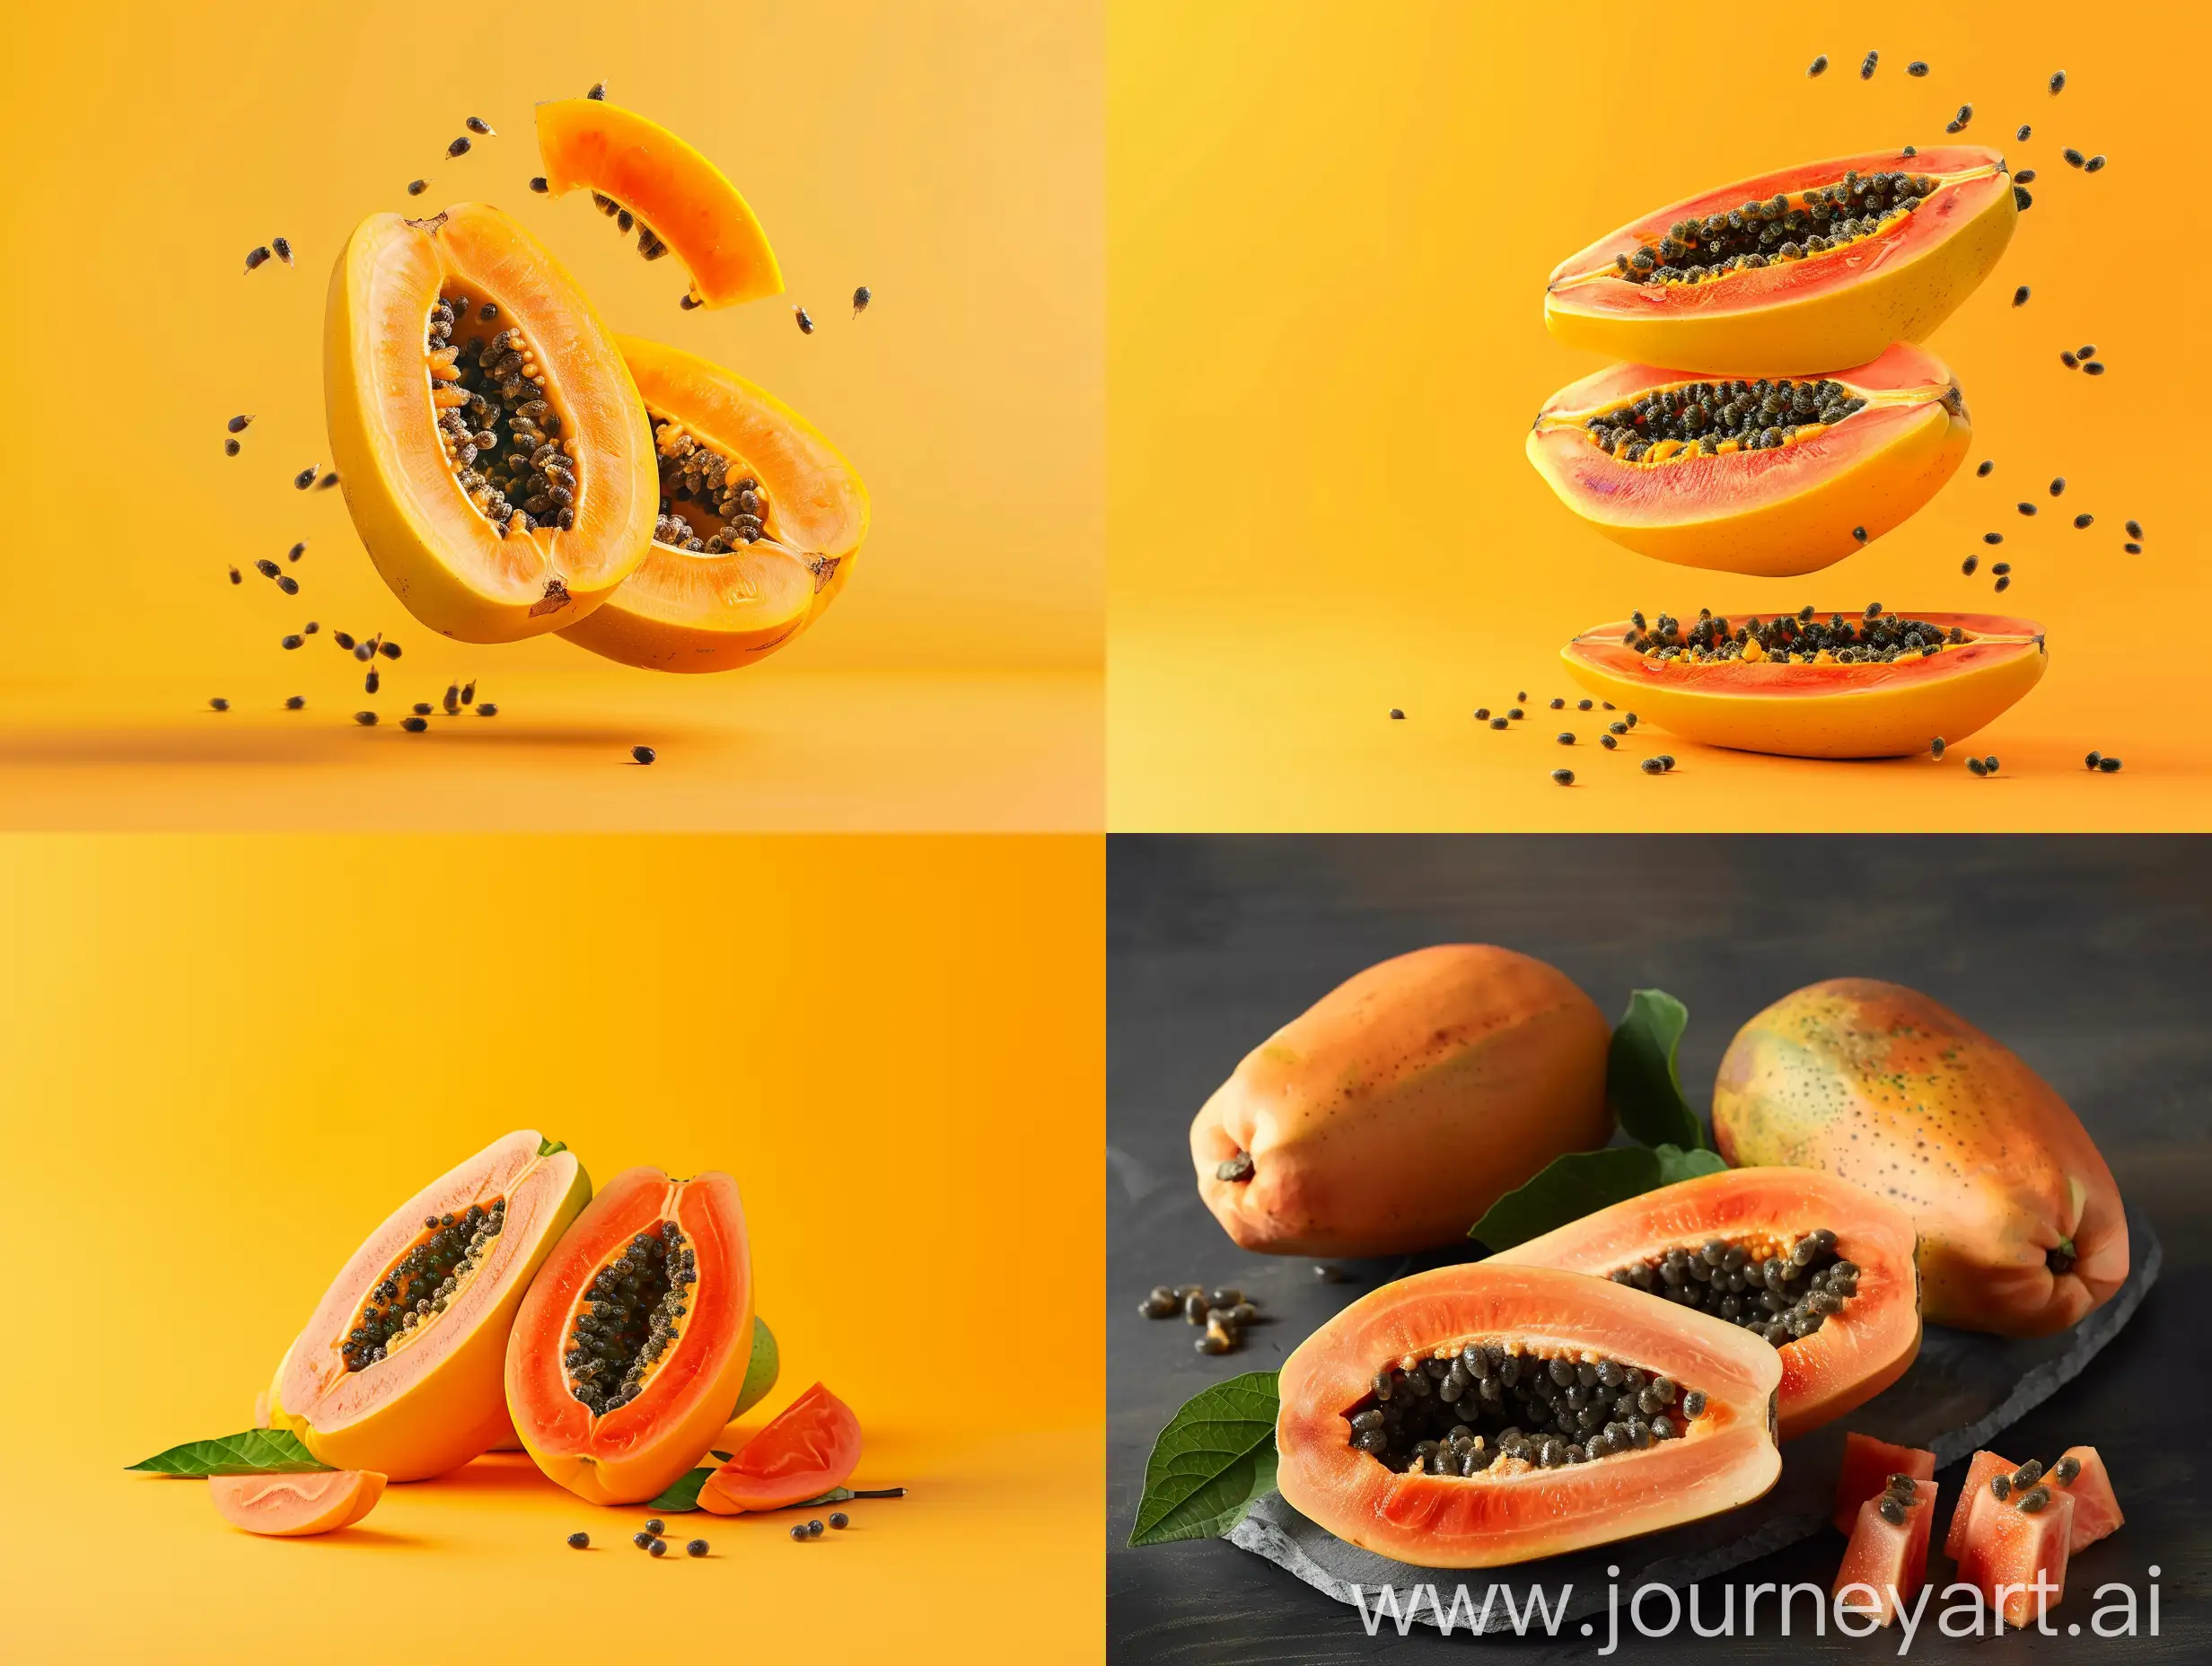 Vibrant-Papaya-Fruit-on-Display-in-Natural-Setting